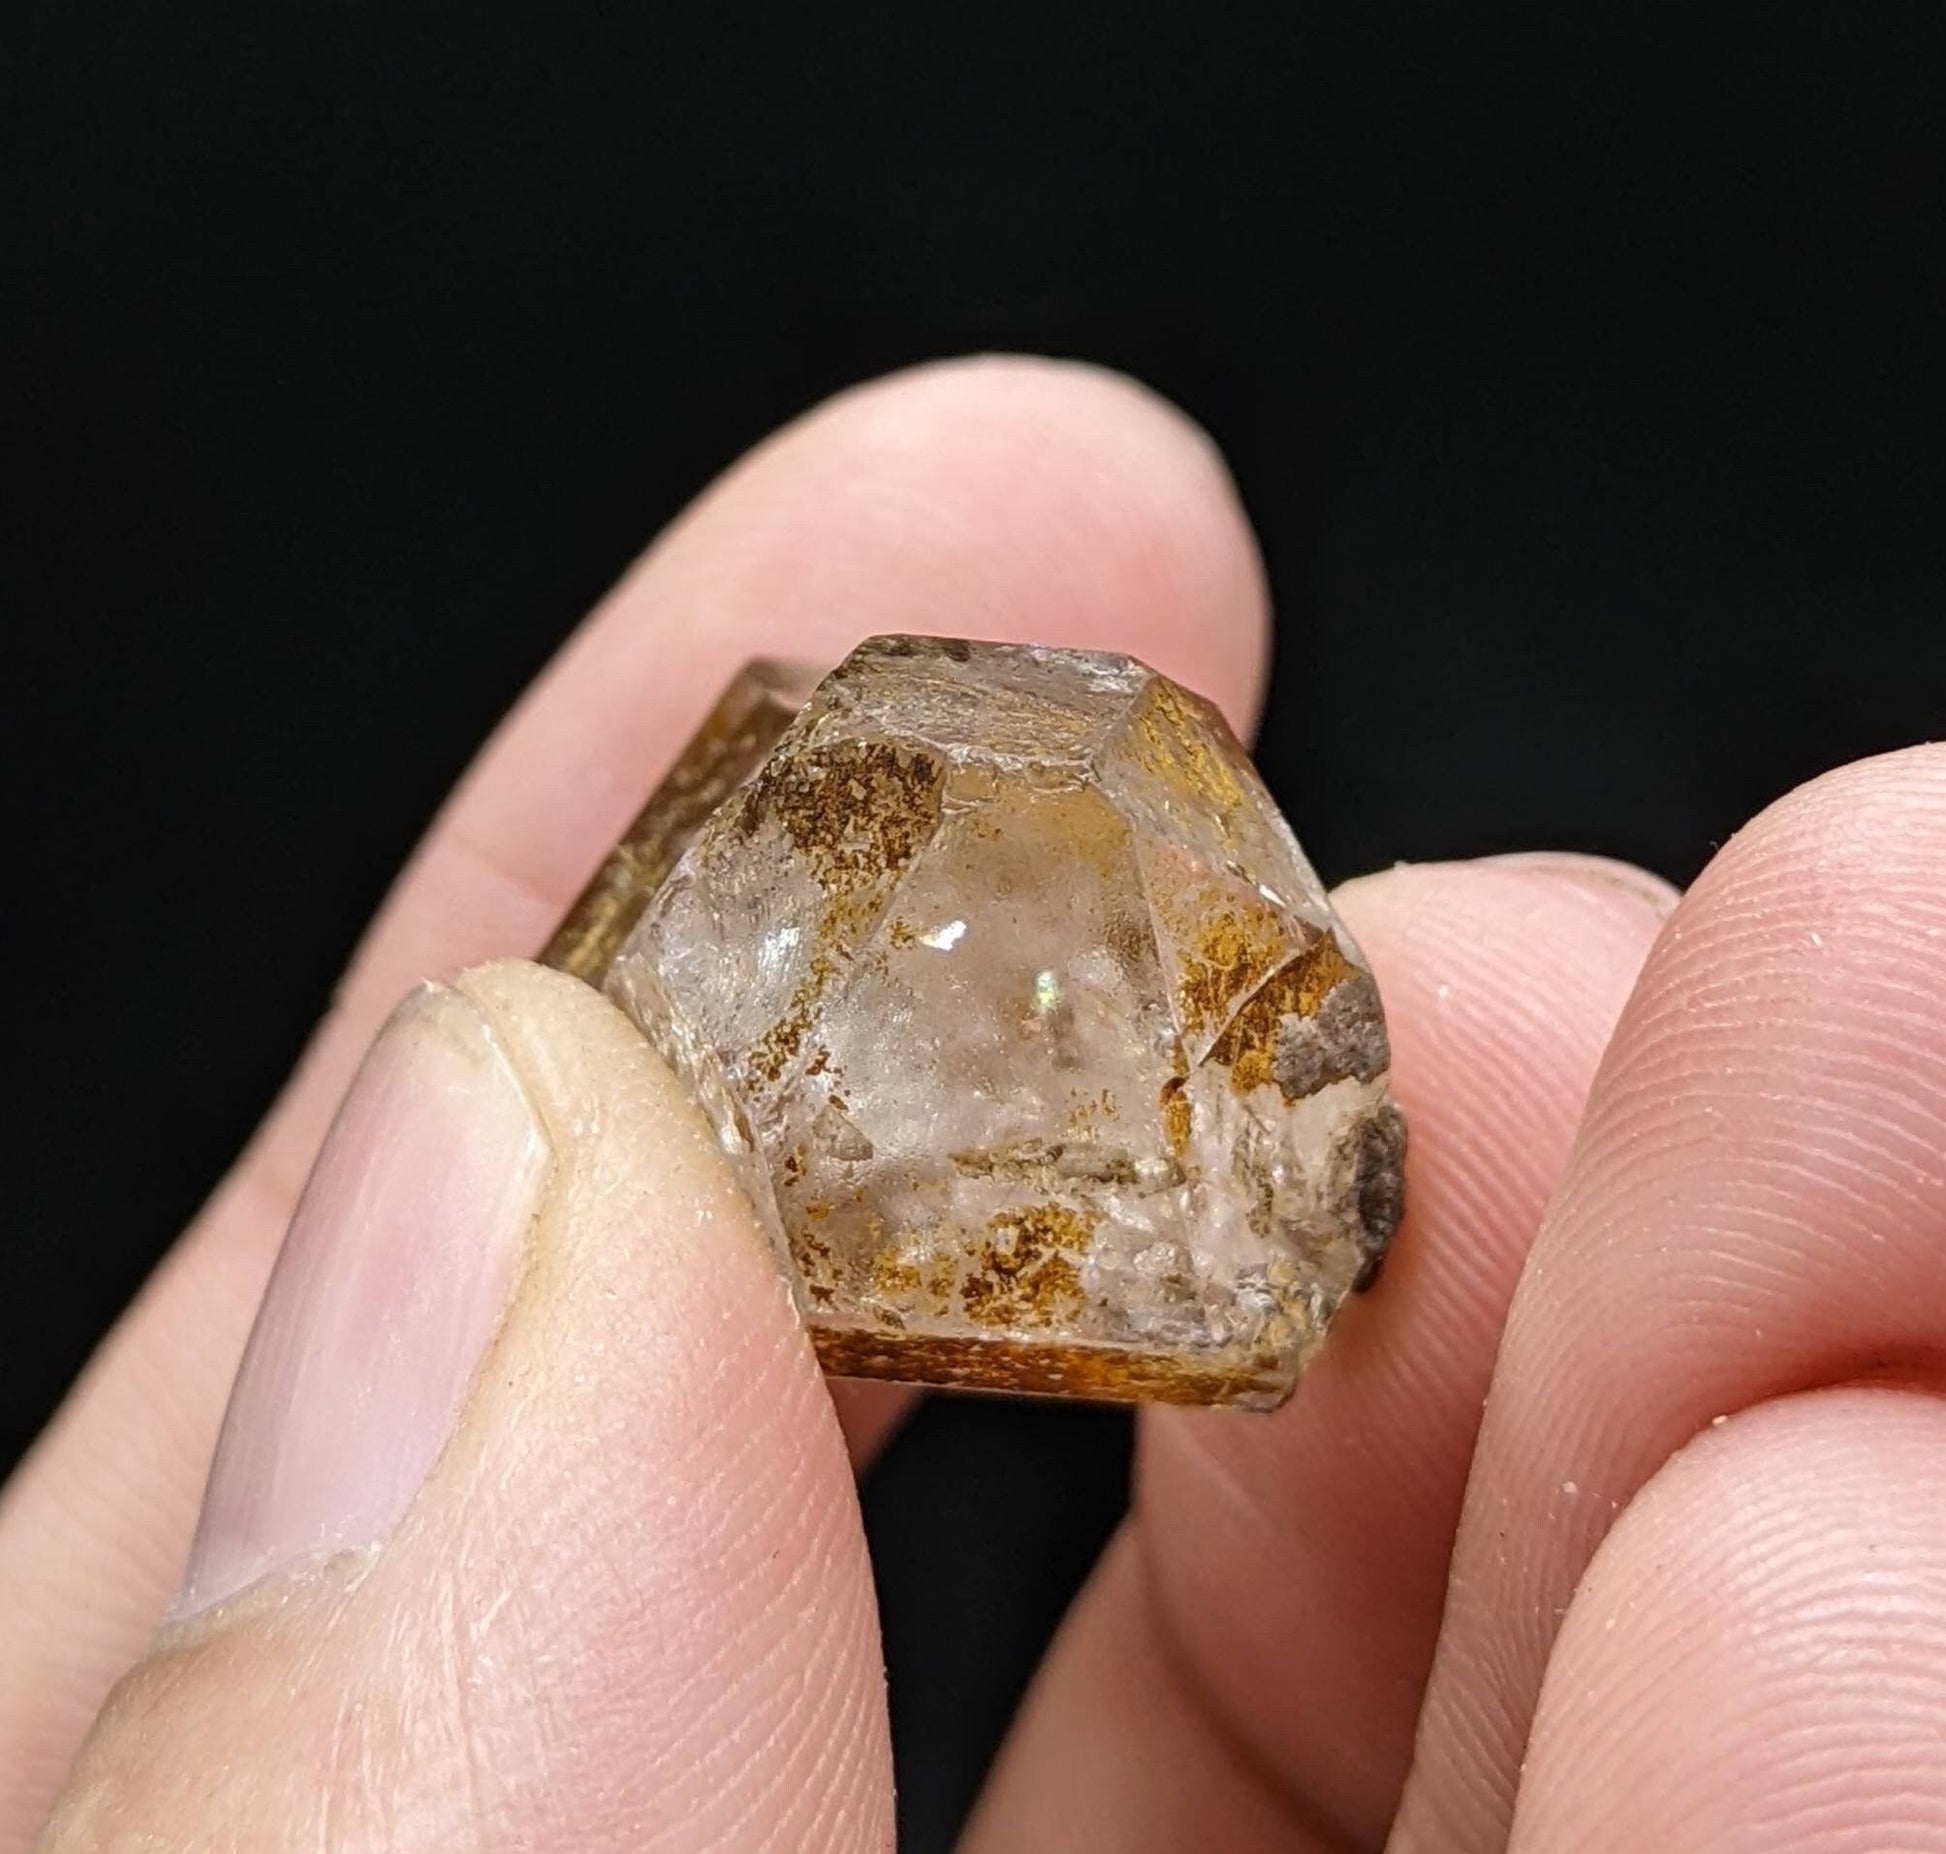 ARSAA GEMS AND MINERALSSmall window quartz crystal from Baluchistan Pakistan, 8.5 grams - Premium  from ARSAA GEMS AND MINERALS - Just $15.00! Shop now at ARSAA GEMS AND MINERALS